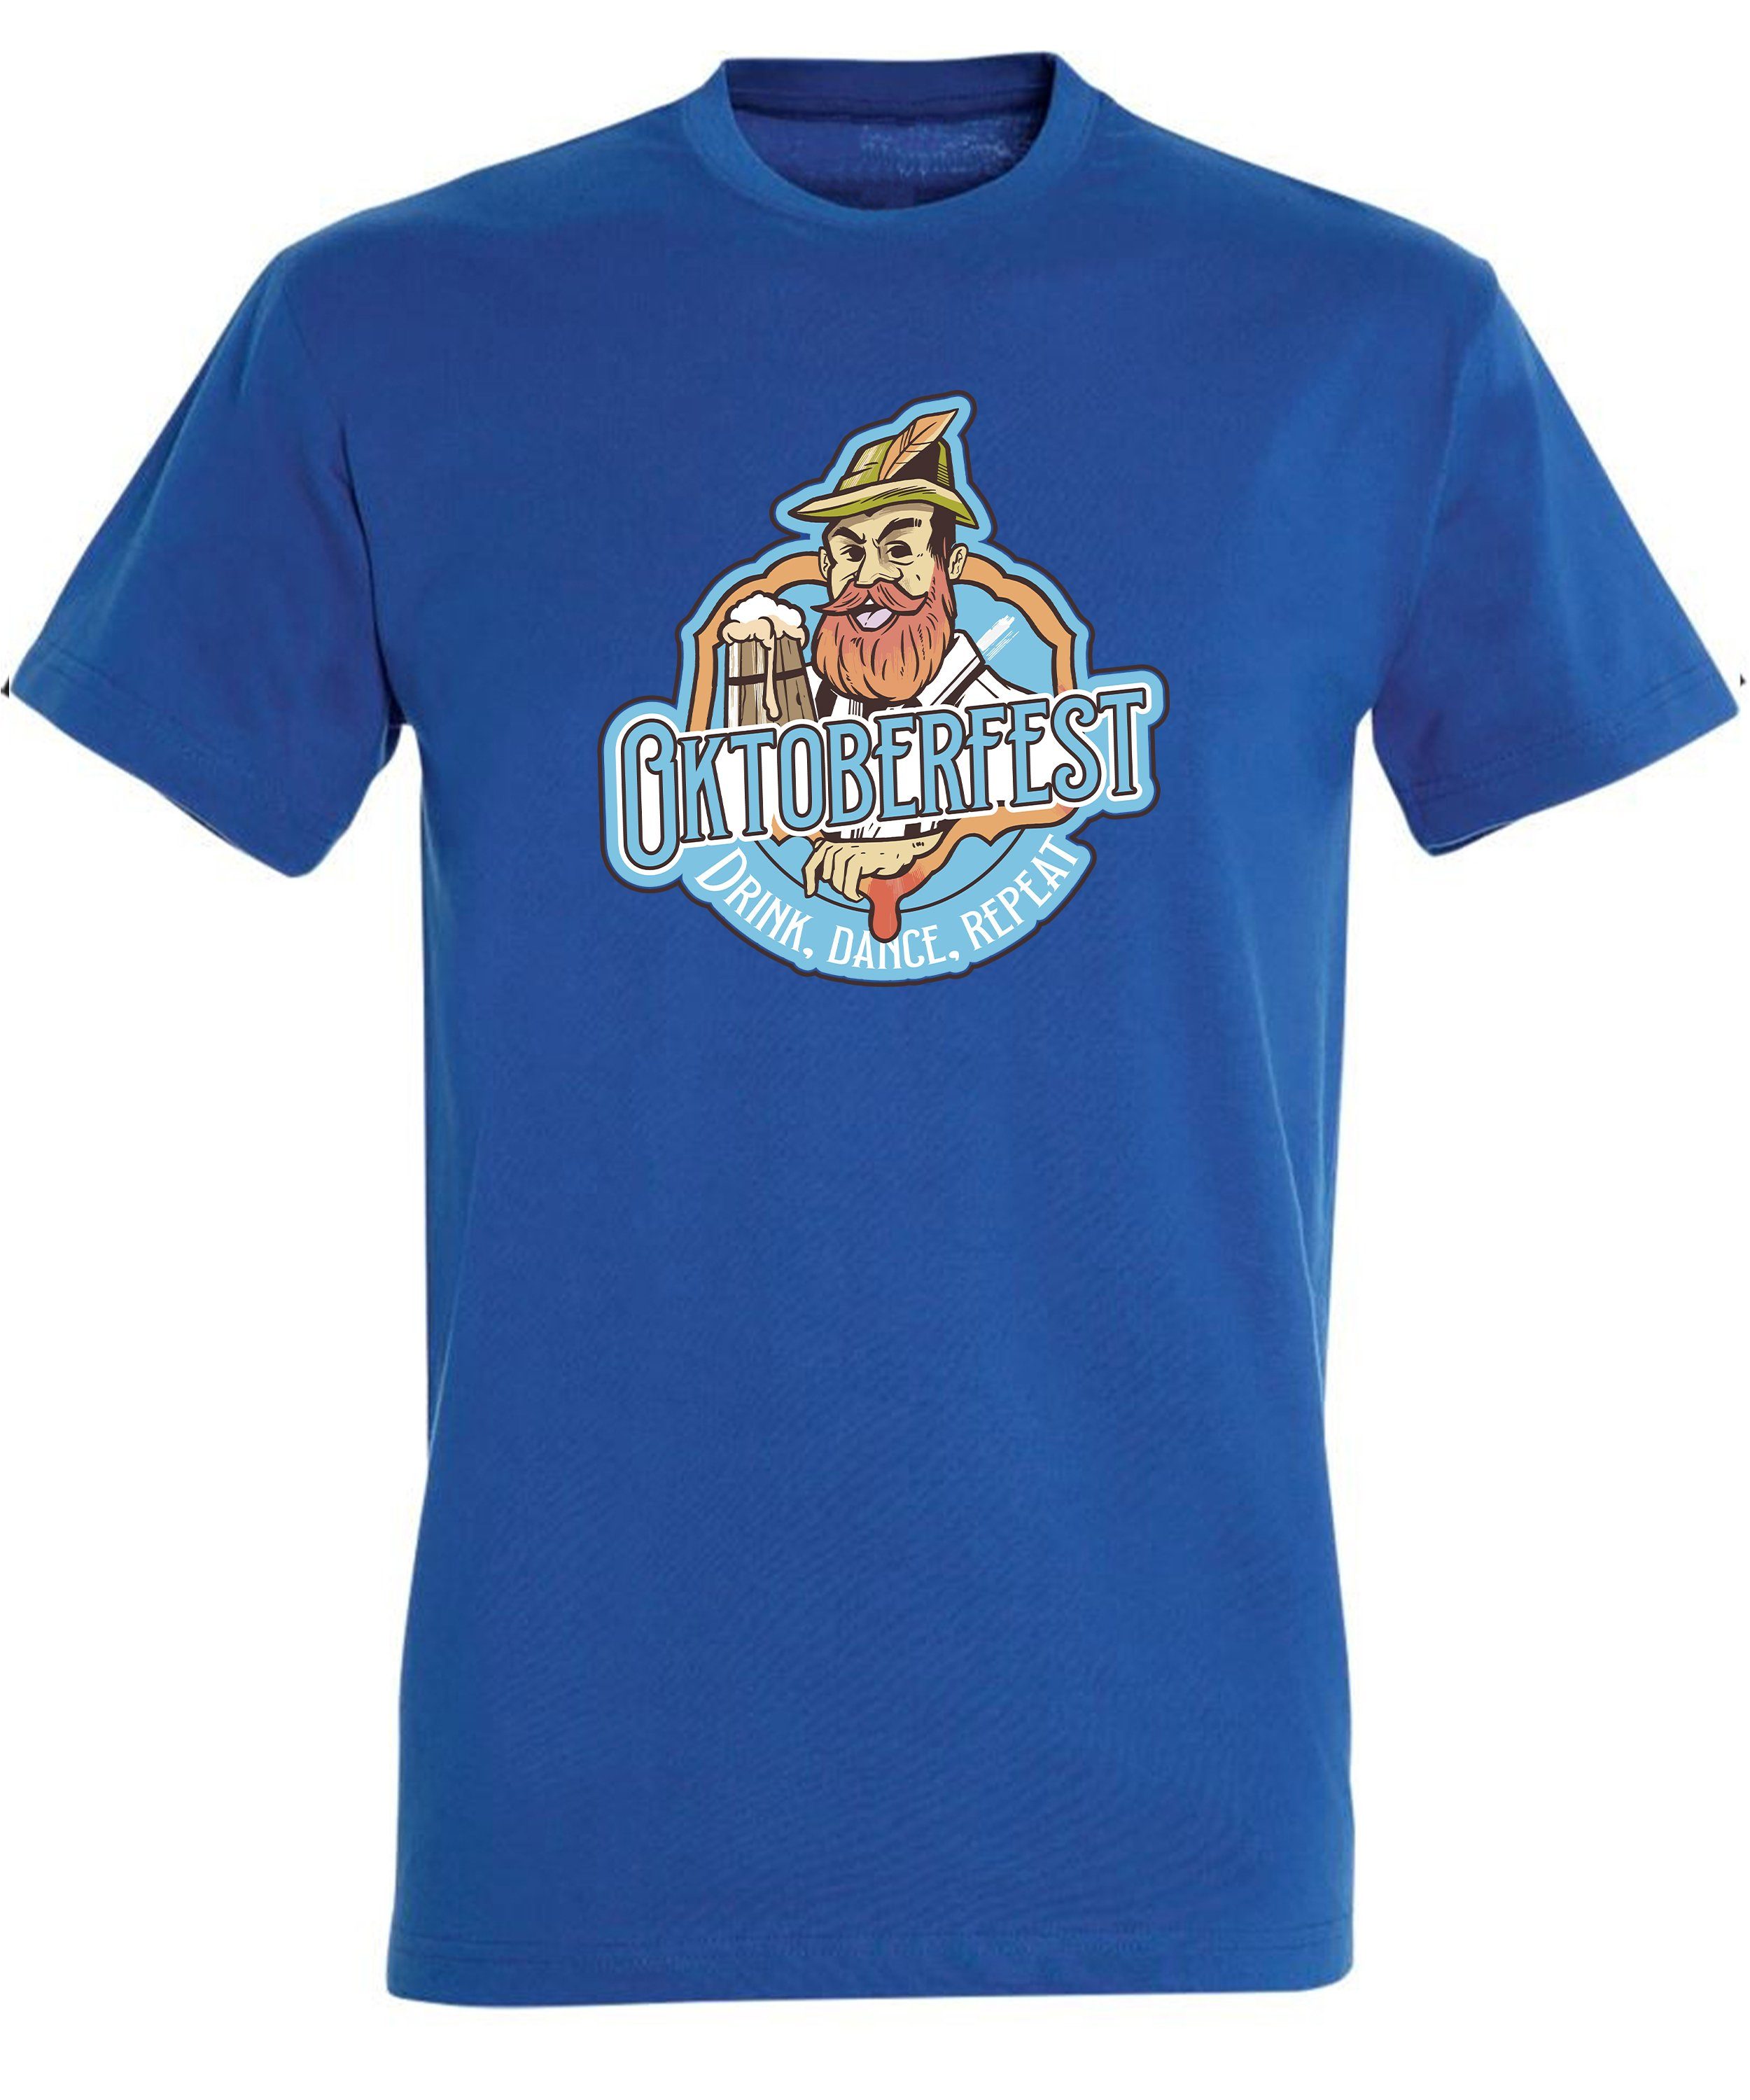 Shirt T-Shirt i318 Oktoberfest mit MyDesign24 Regular T-Shirt Baumwollshirt Fun blau royal Fit, Trinkshirt Aufdruck - Herren Print